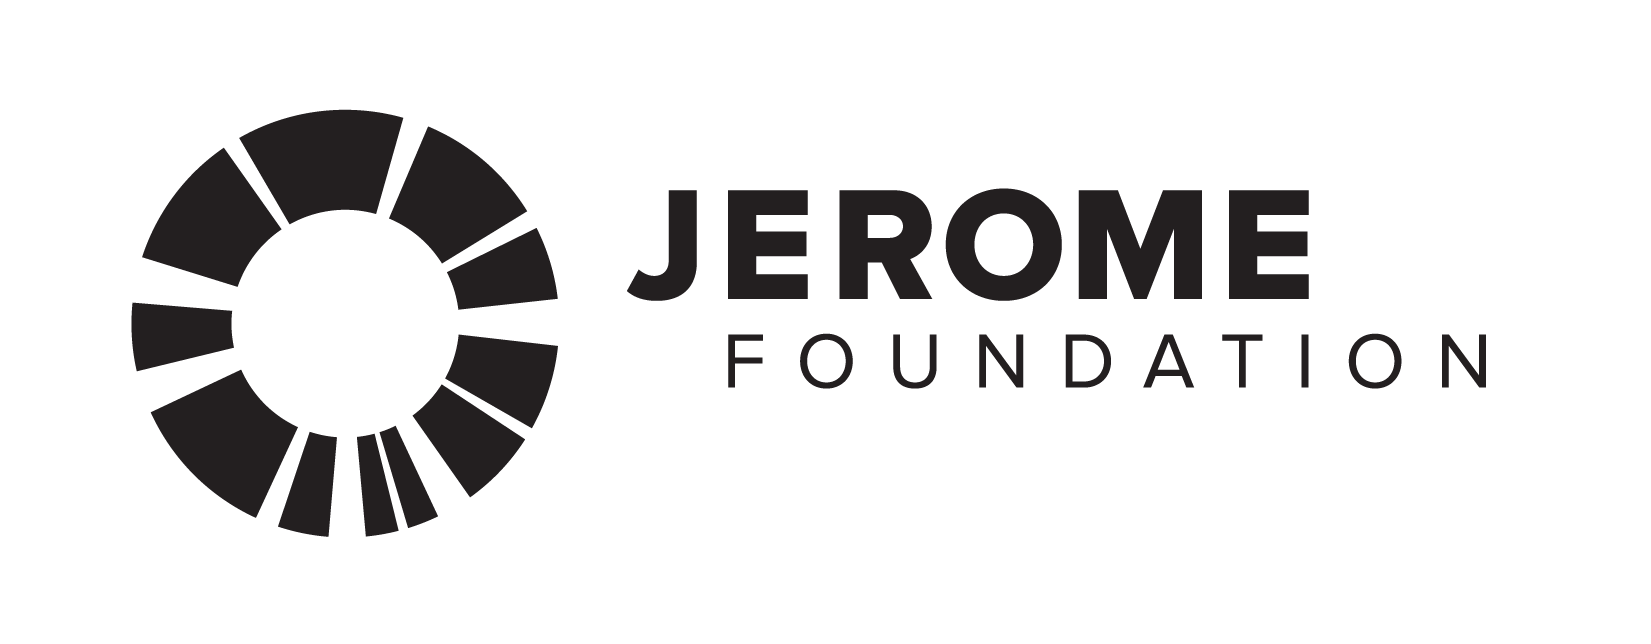 logo for Jerome Foundation